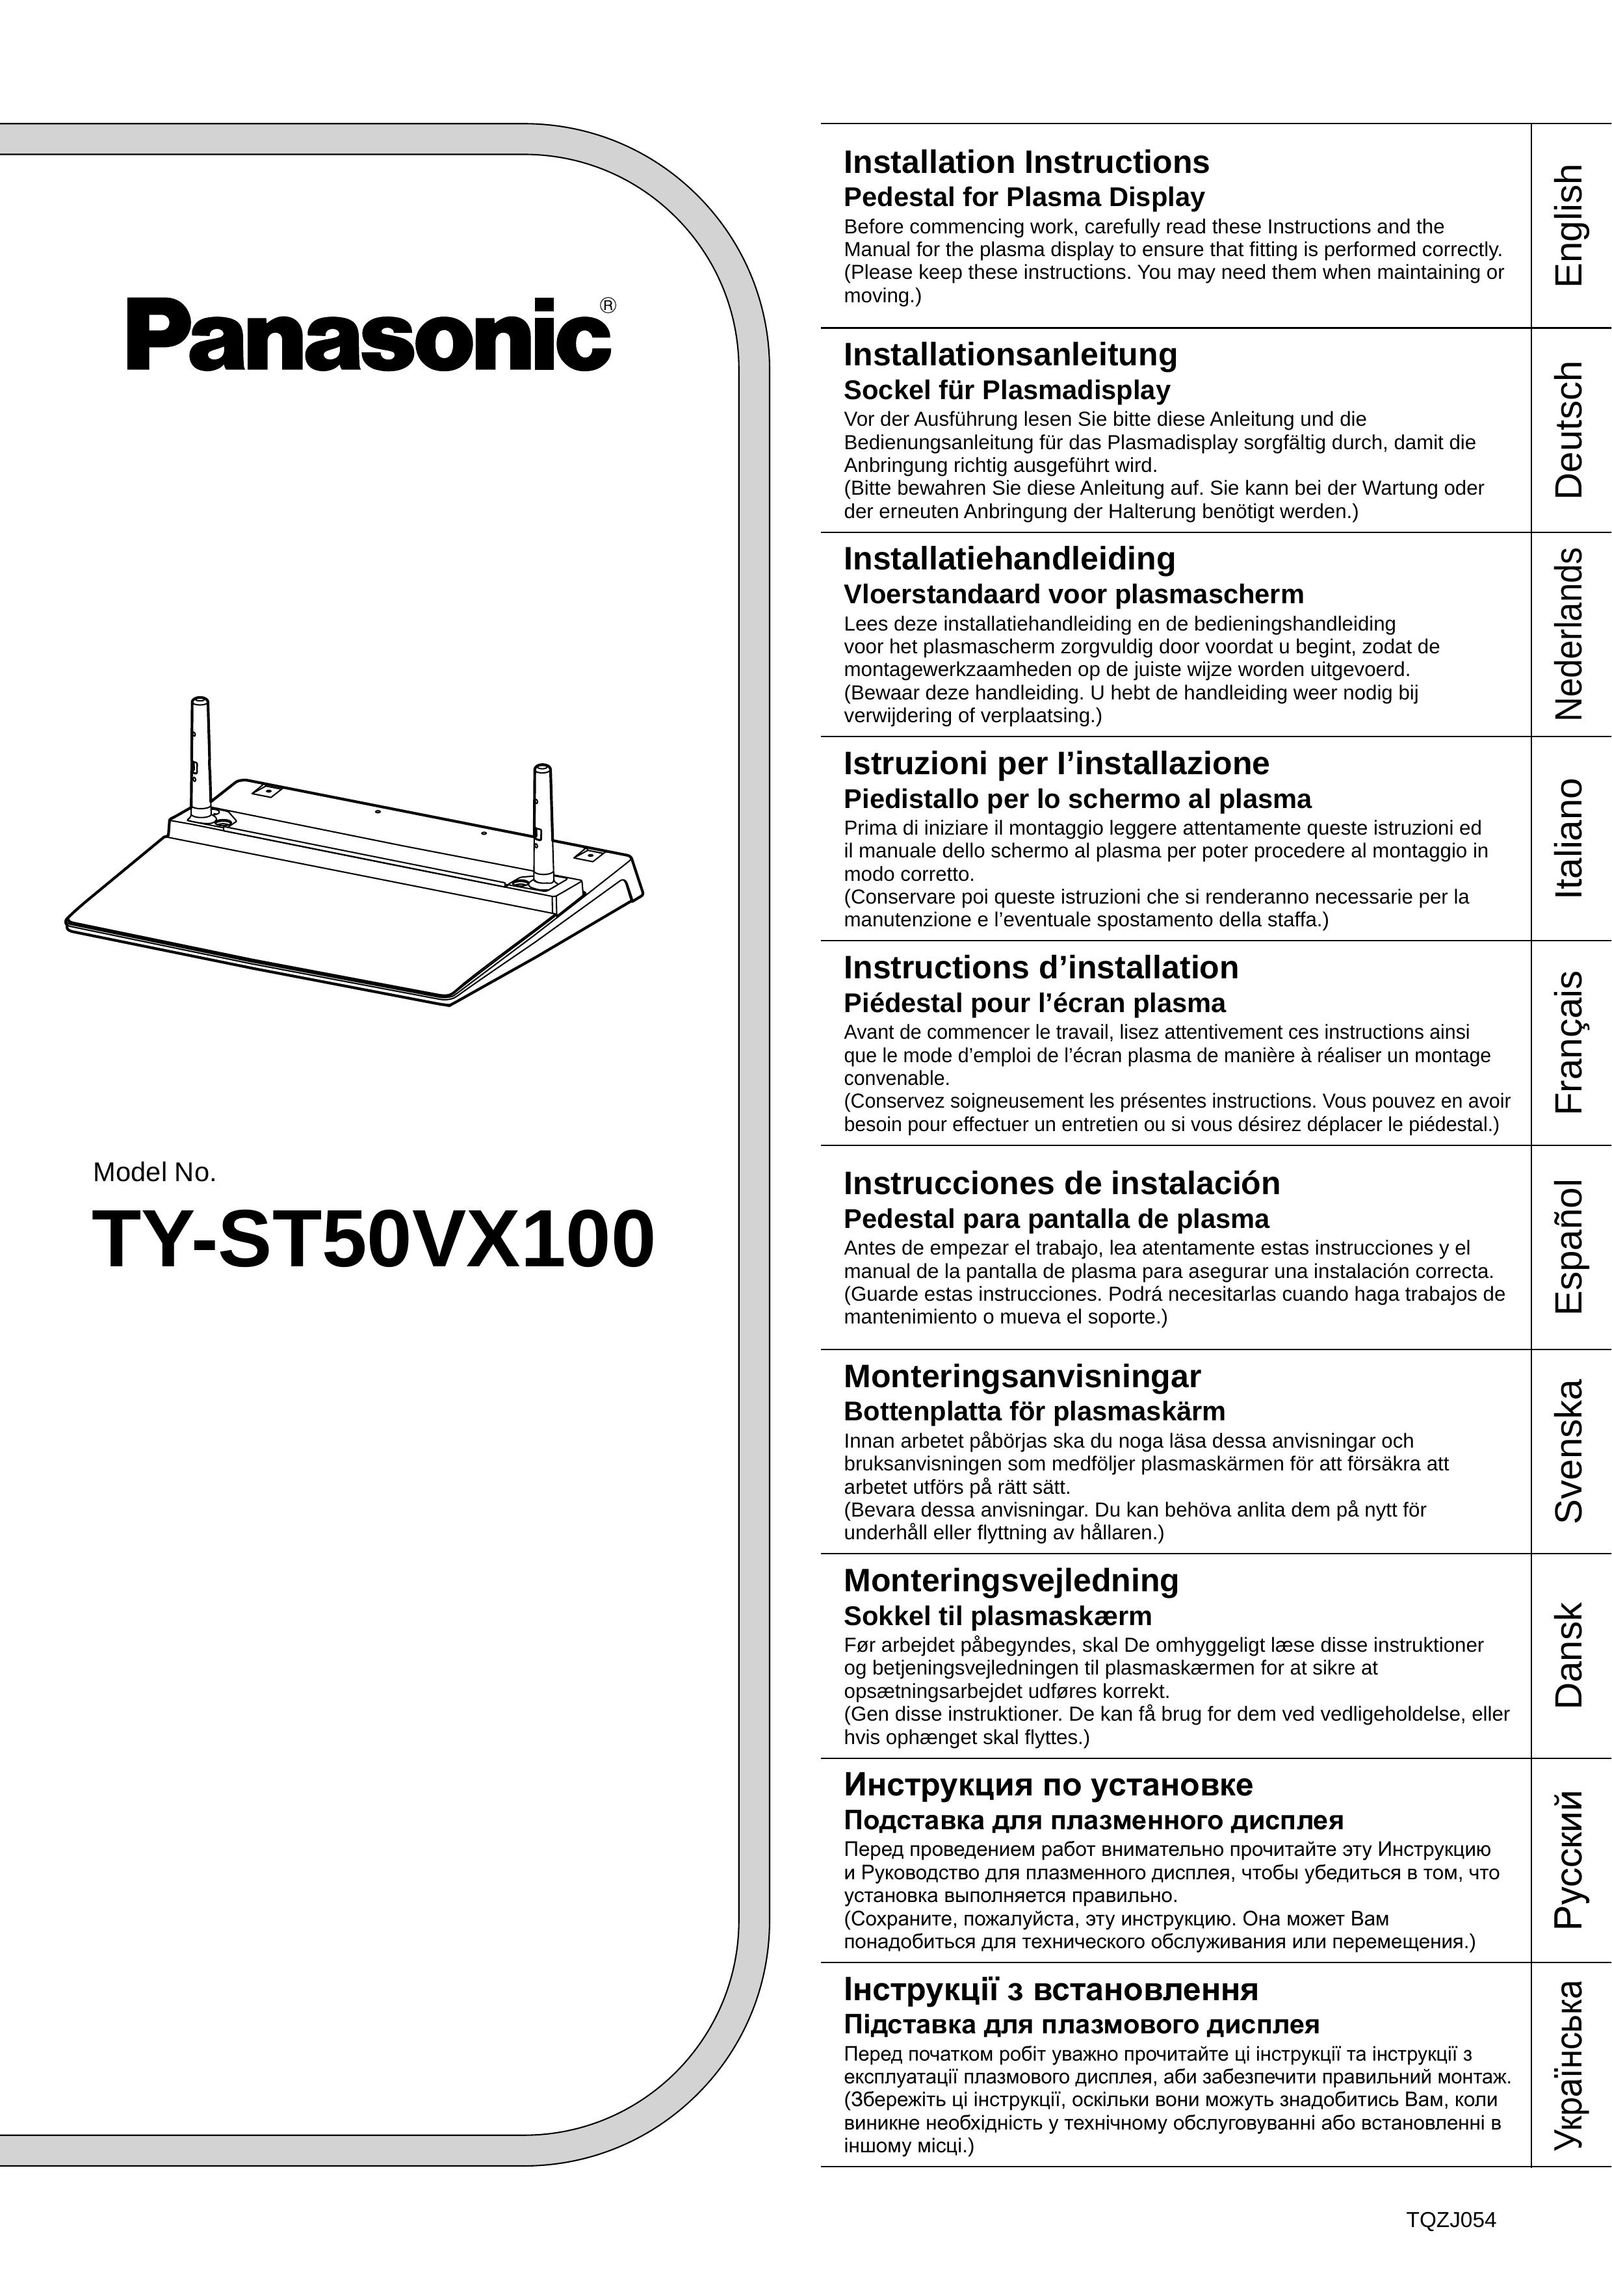 Panasonic TY-ST50VX100 TV Mount User Manual